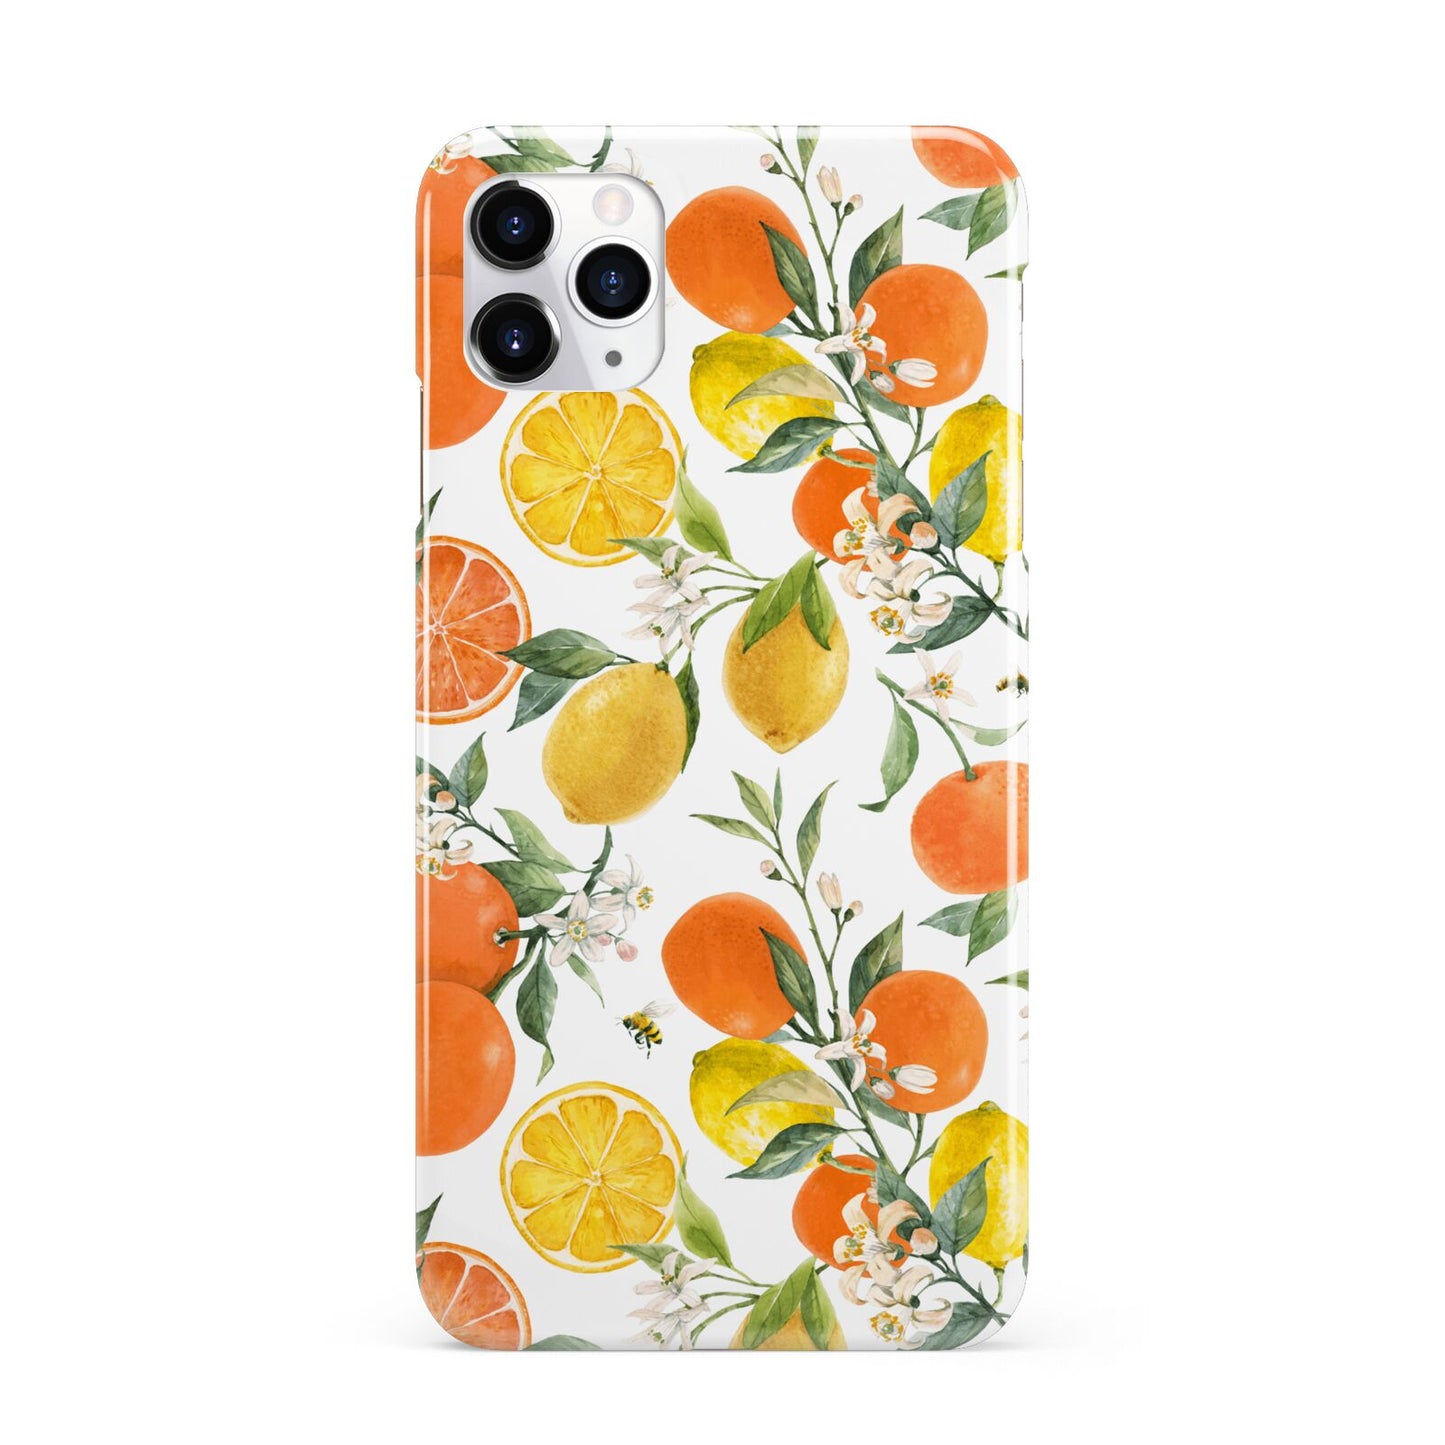 Lemons and Oranges iPhone 11 Pro Max 3D Snap Case